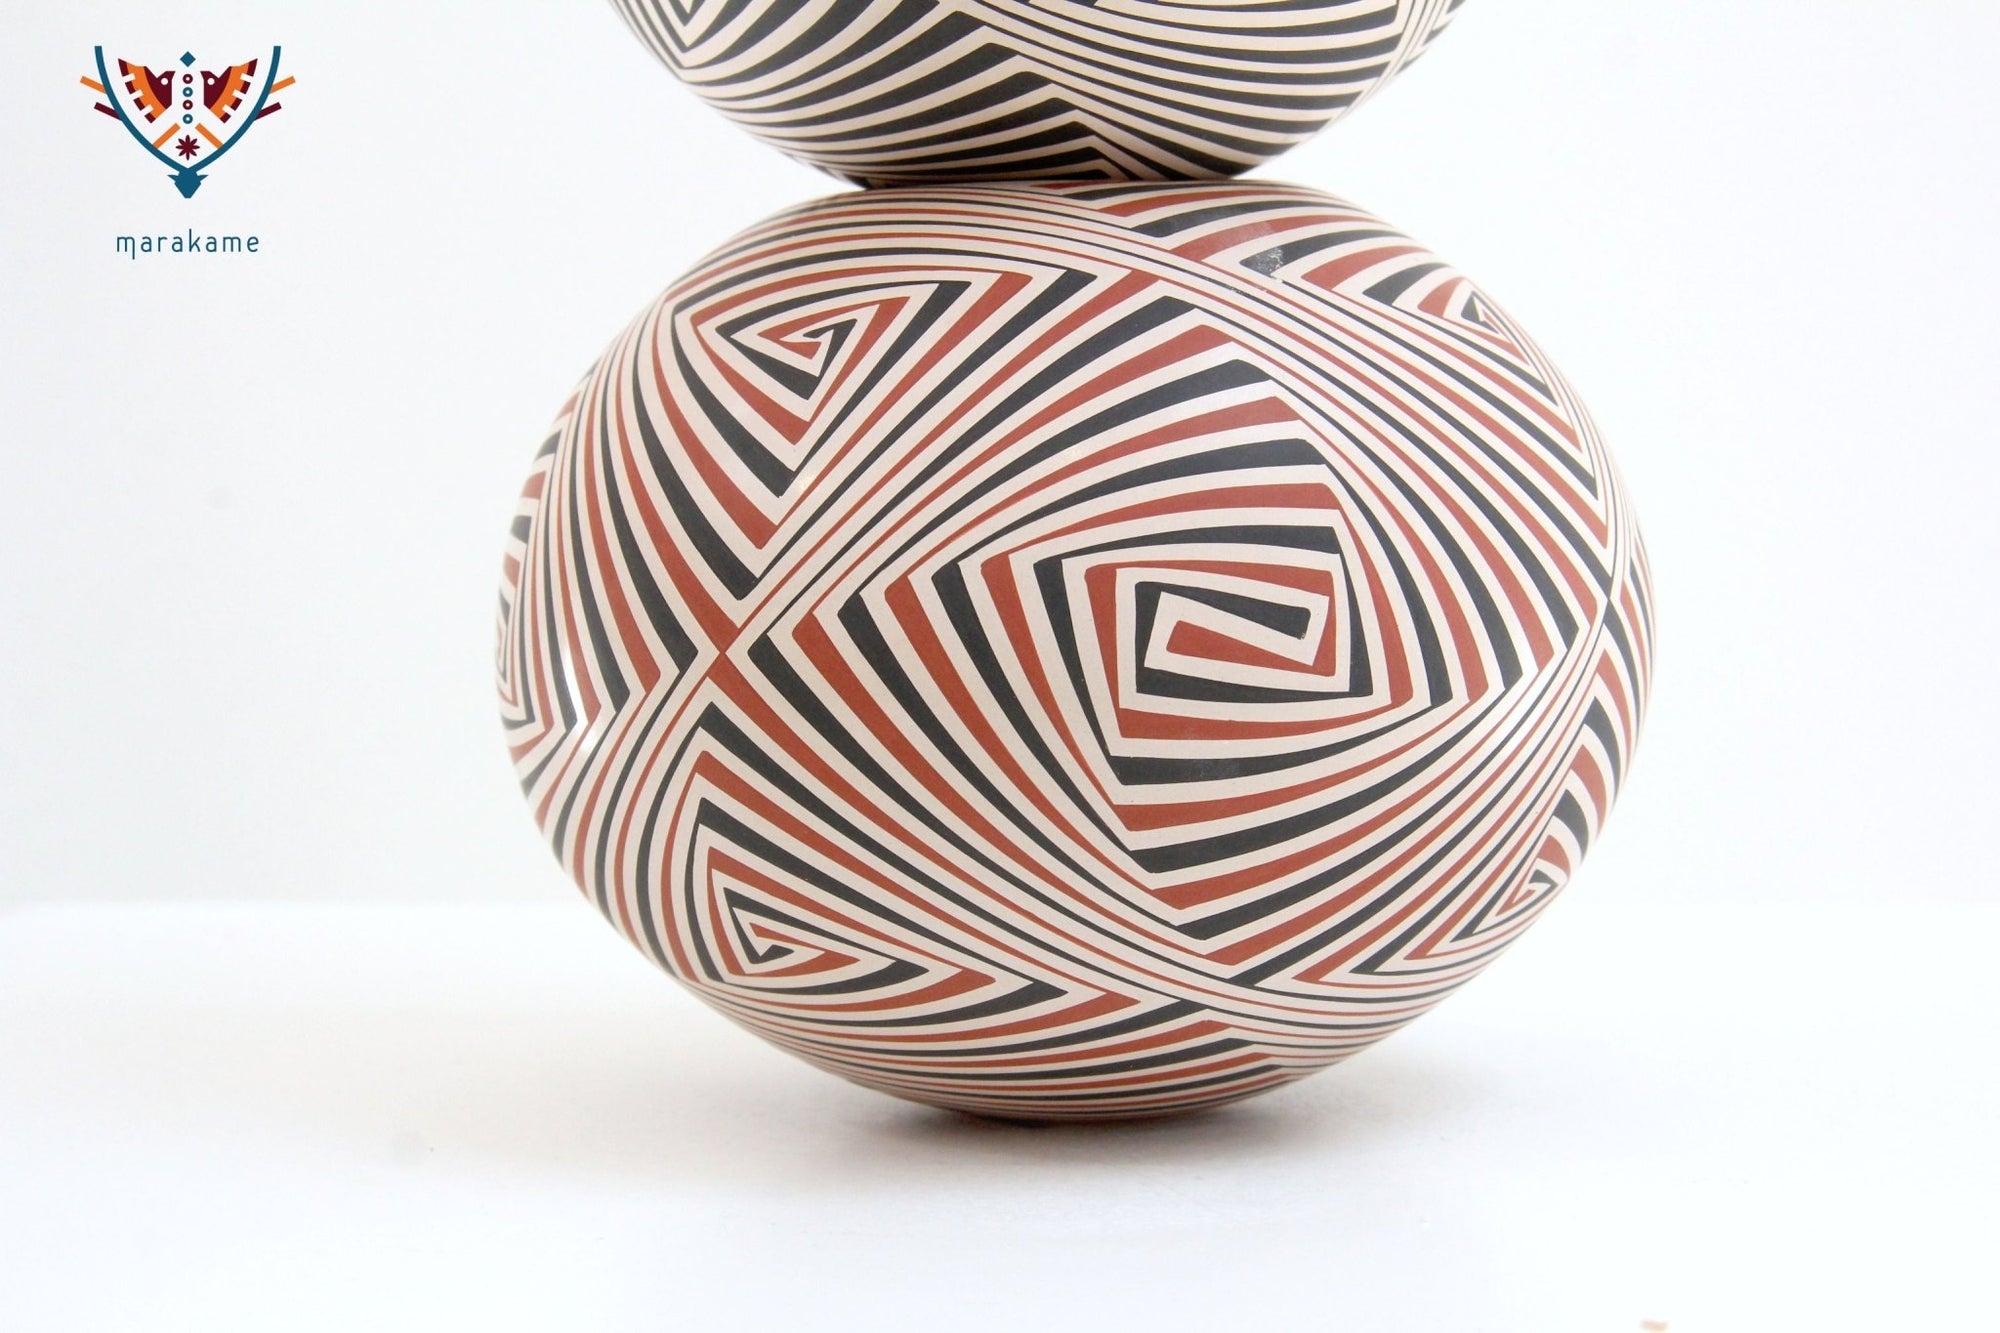 Mata Ortiz Keramik – Turm – Huichol-Kunst – Marakame